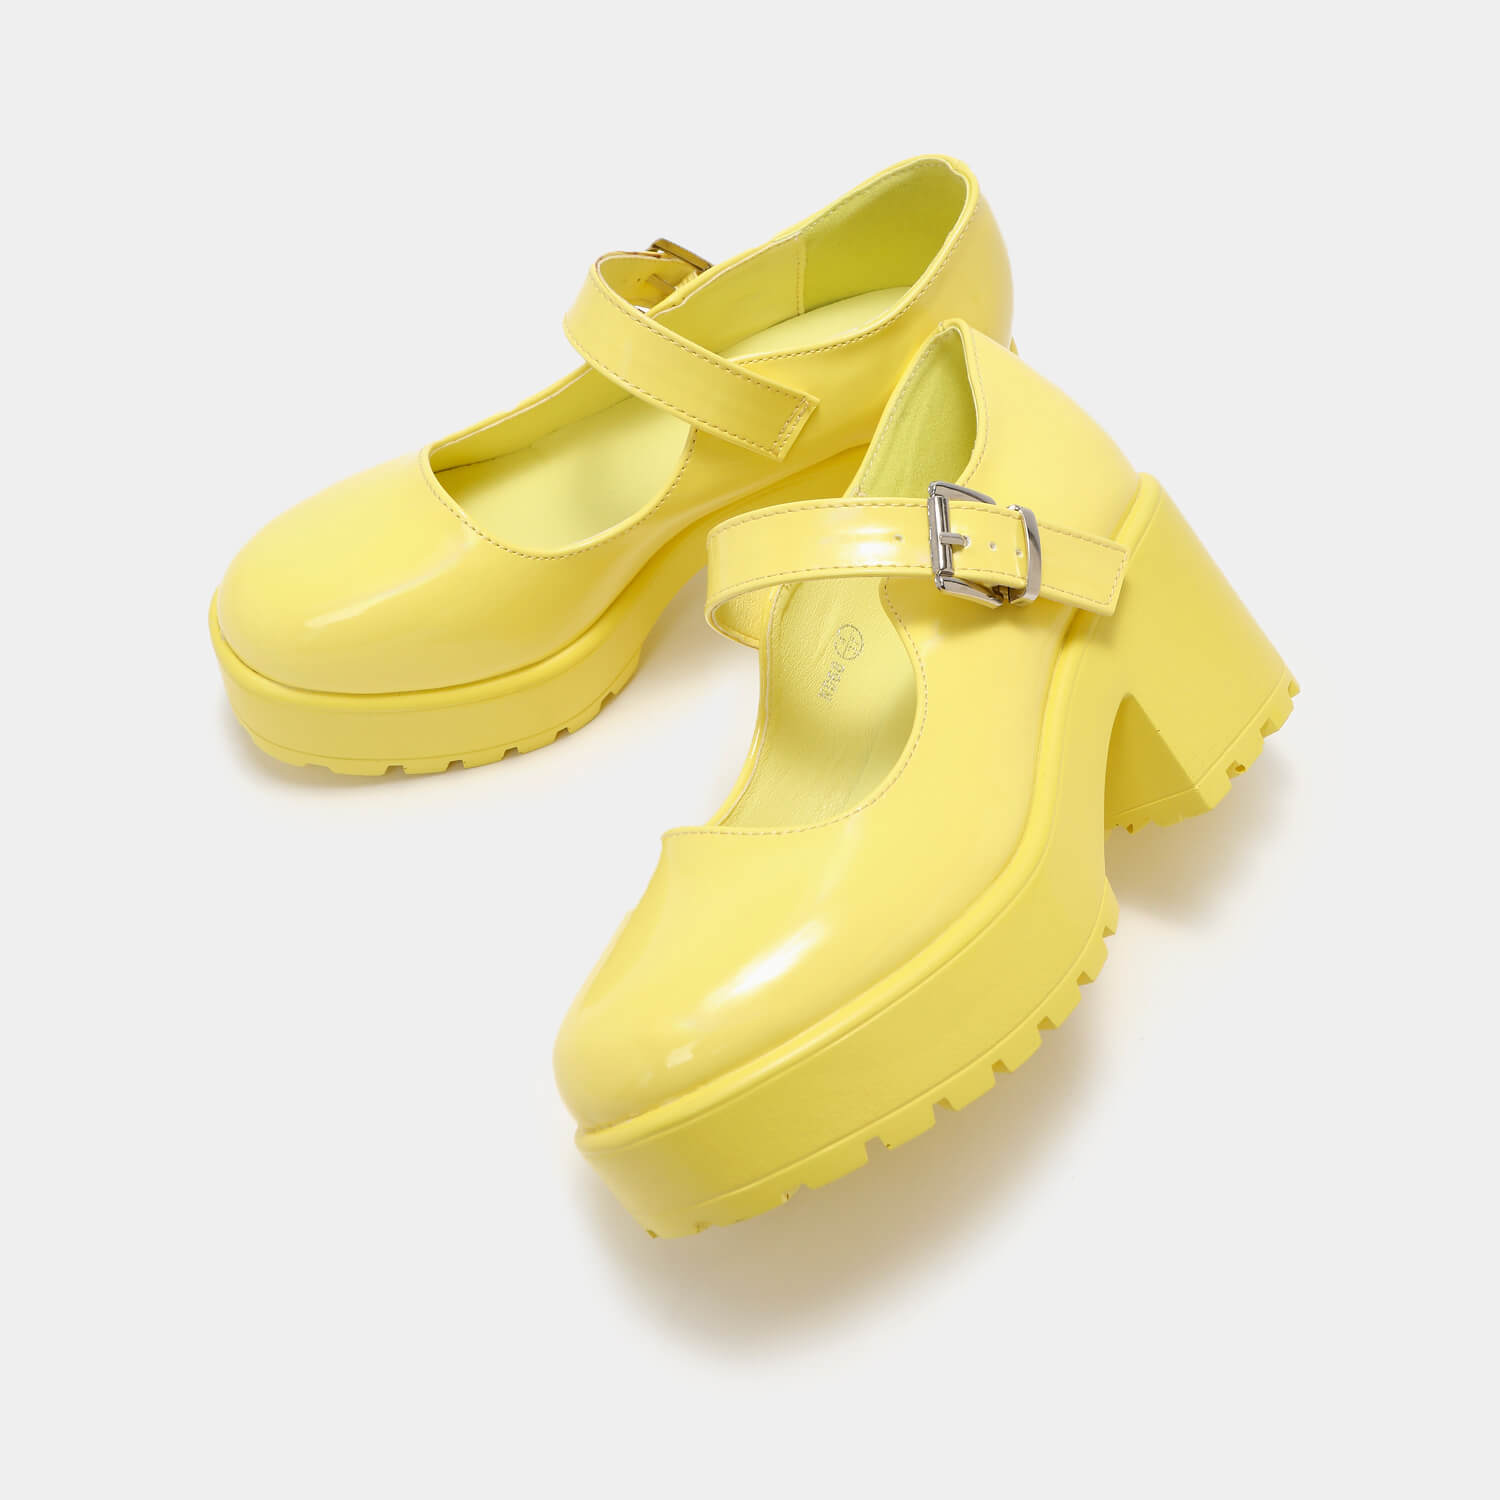 Tira Mary Jane Shoes 'Sunshine Yellow Edition' - Mary Janes - KOI Footwear - Yellow - Top View